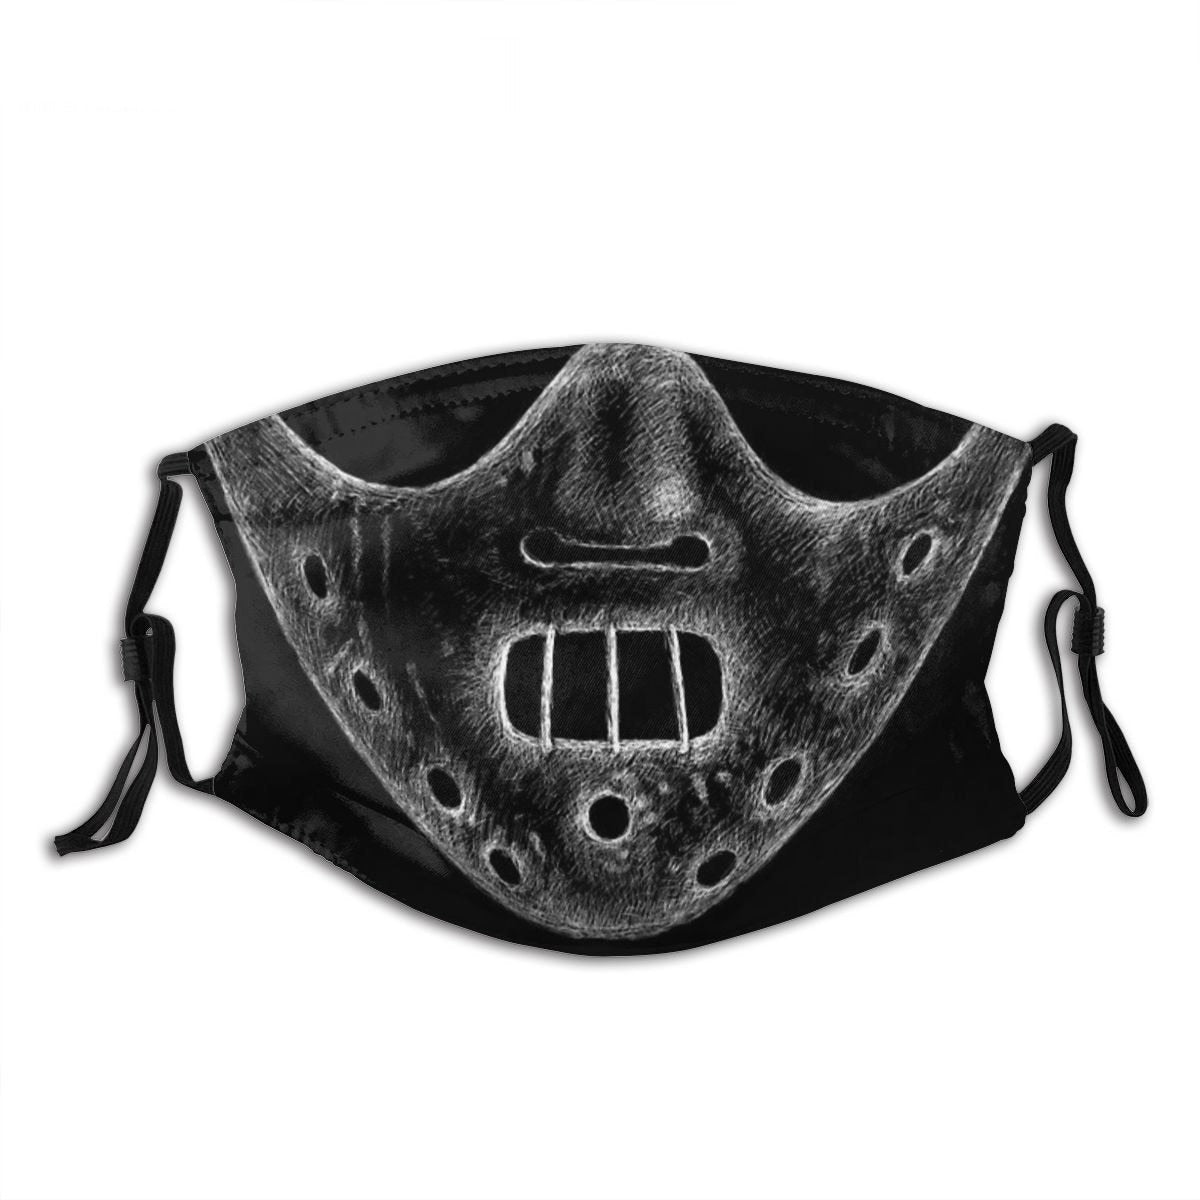 Masque PM 2.5 Hannibal